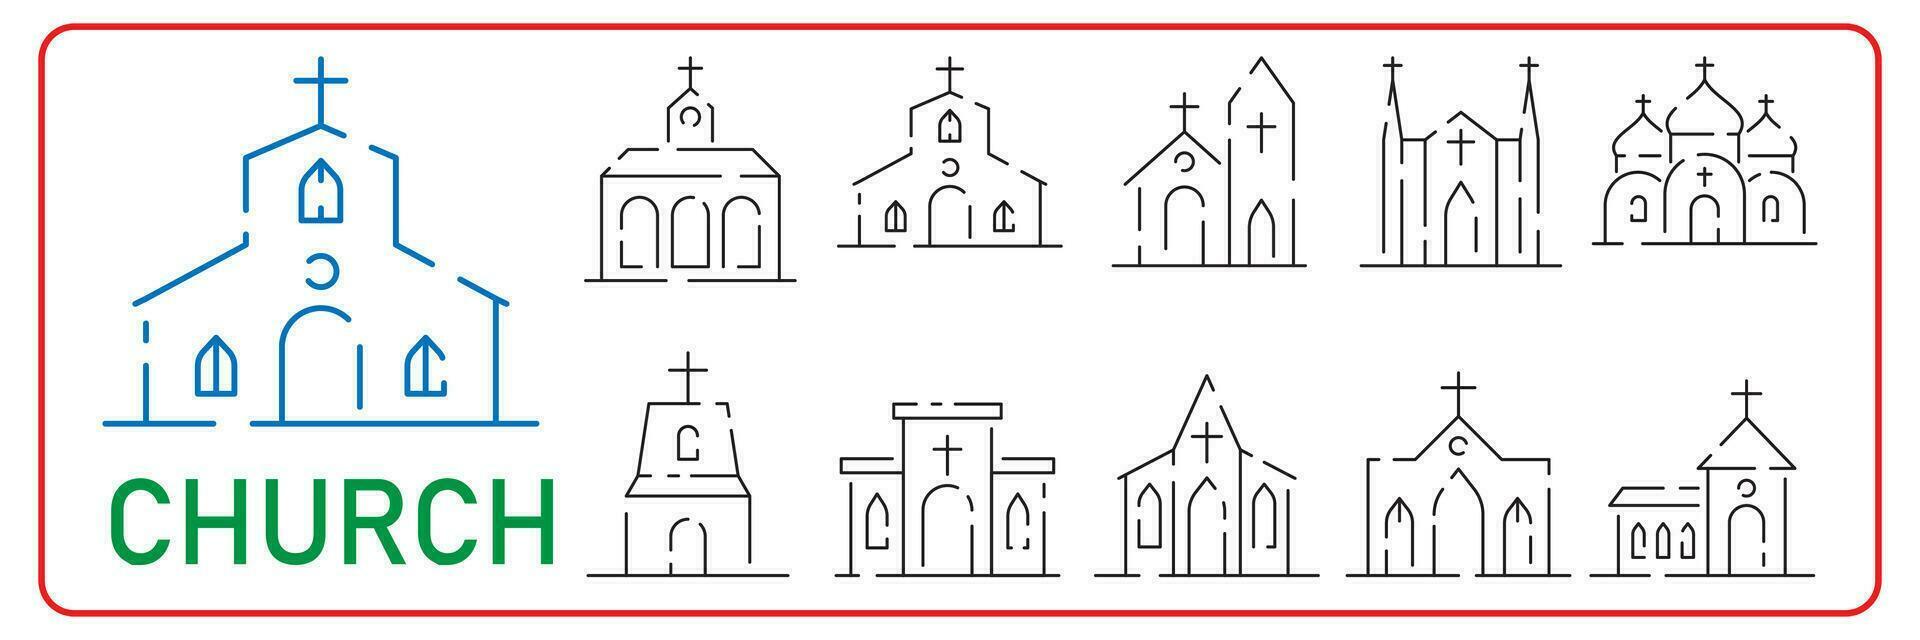 Iglesia línea icono colocar, vector pictograma de el católico capilla edificio. religioso casa ilustración, firmar para cristiano logo. vector edificio.